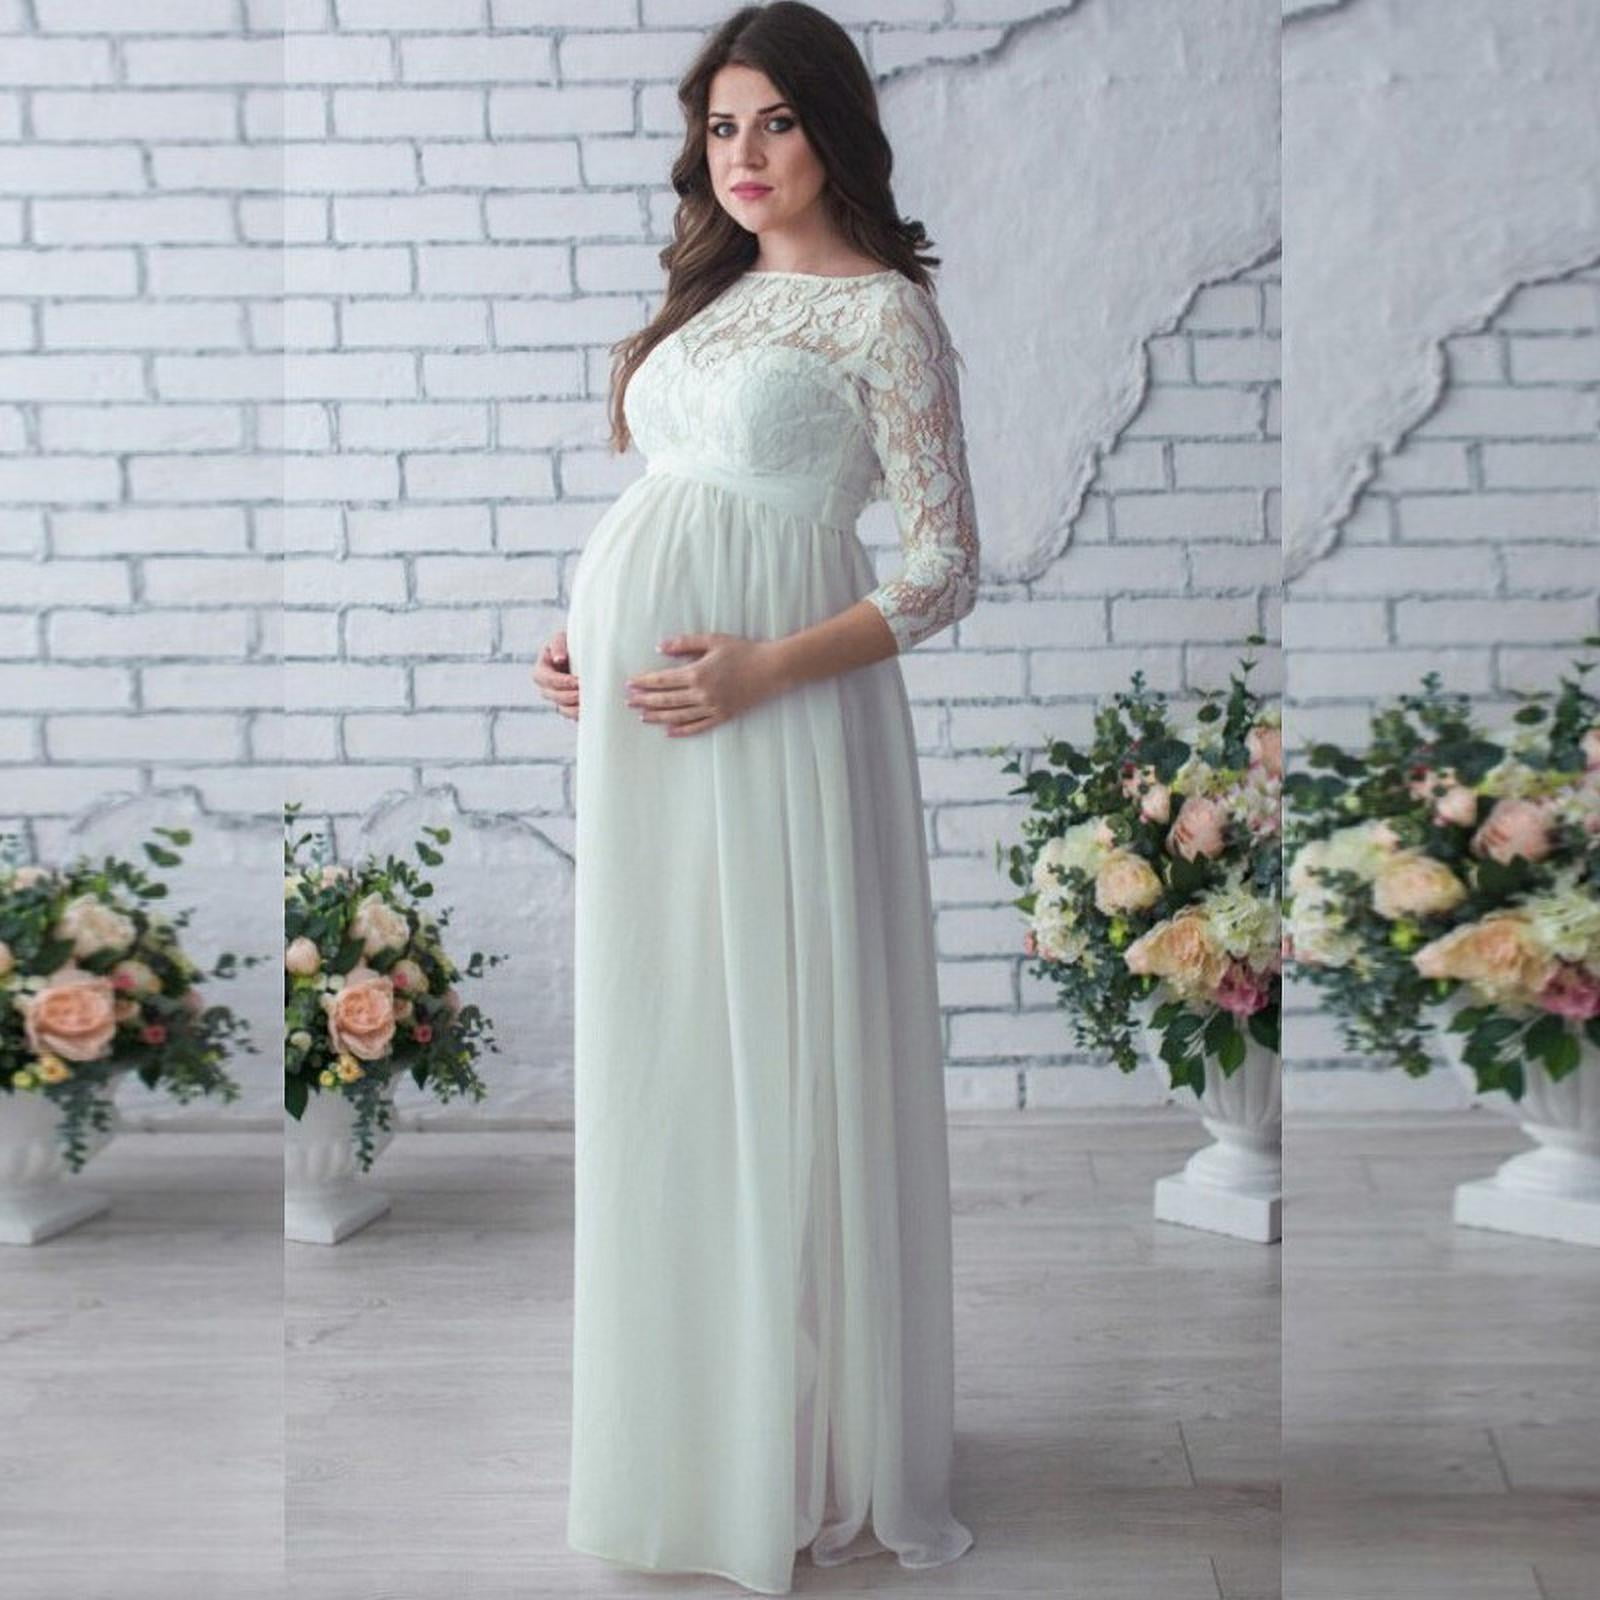 Pregnant Women Lace Maternity Dress Baby Shower Party Cocktail Short Dress  M-3XL | eBay